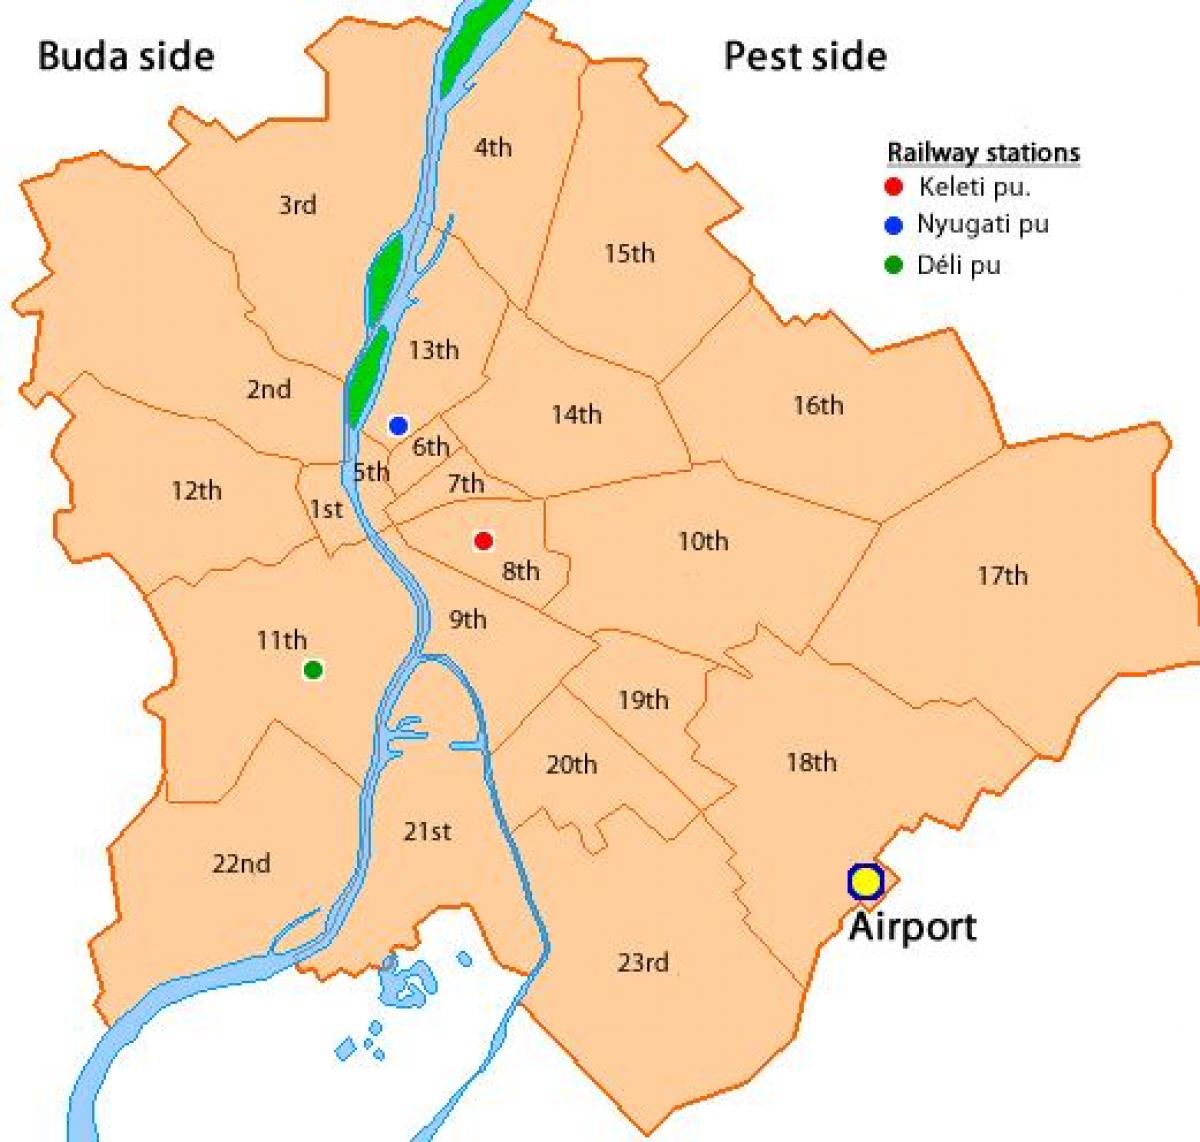 Budapeşte'nin 8. bölgesinde harita